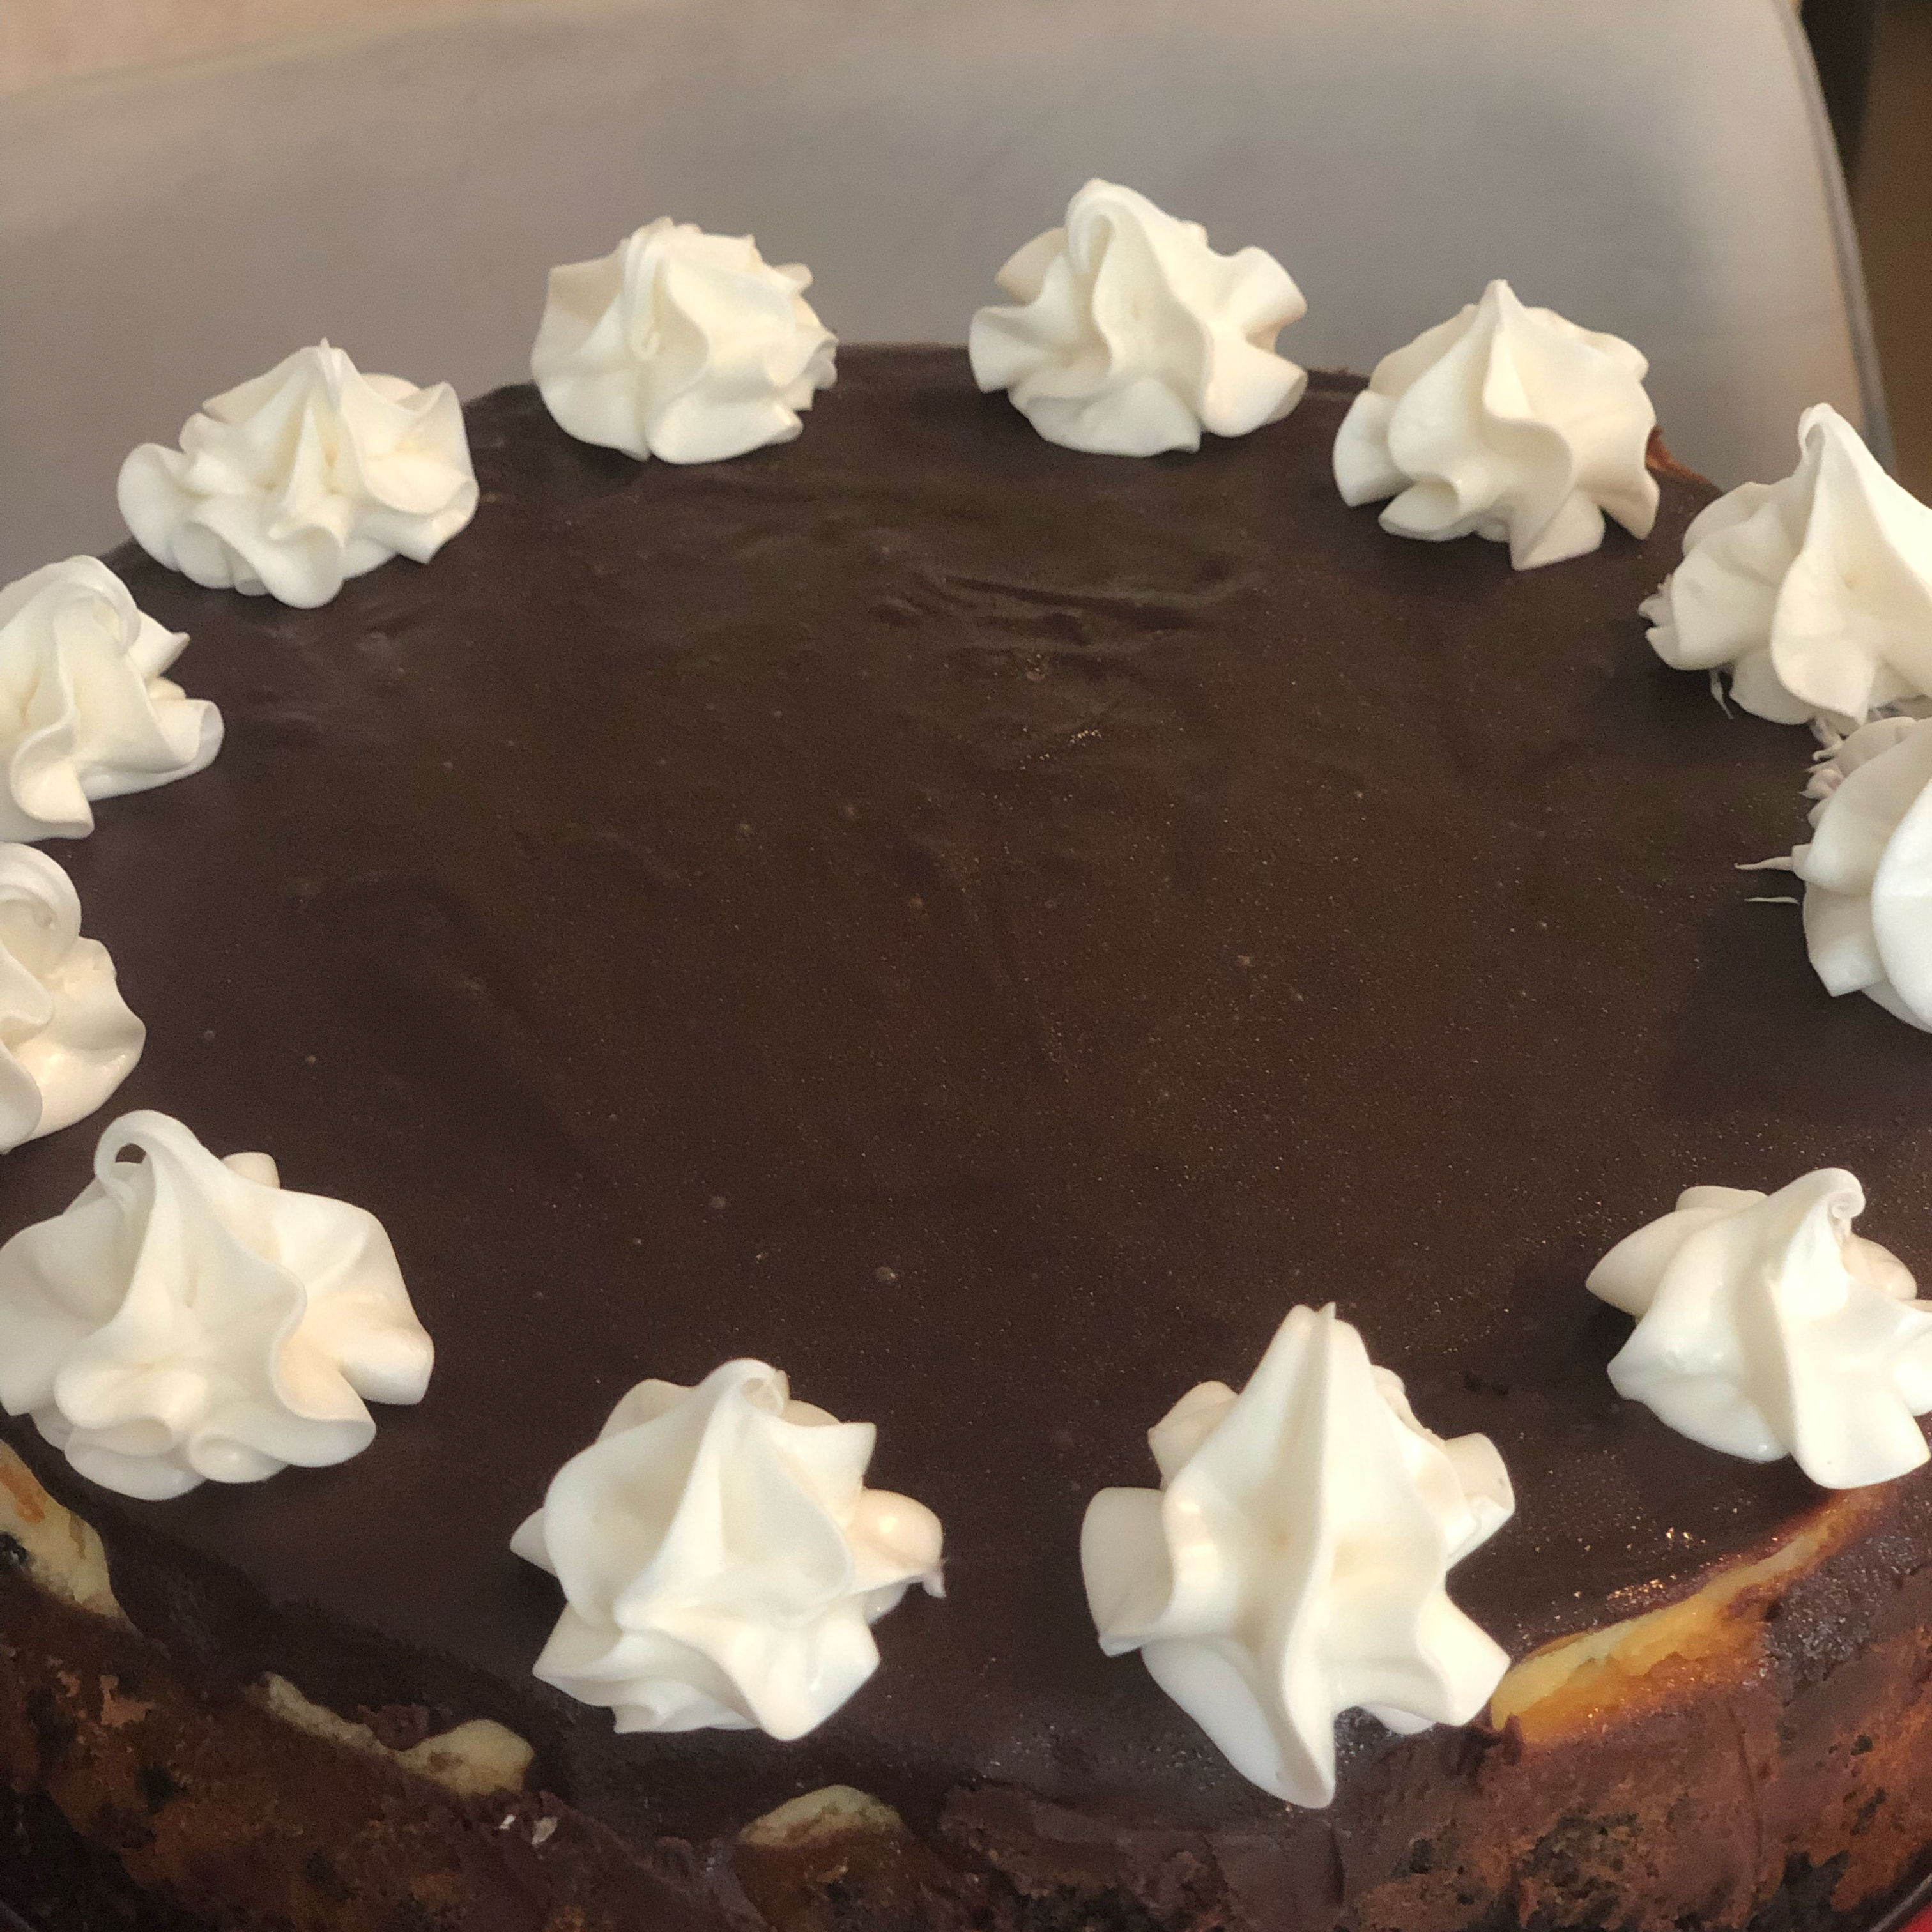 Chocolate Cookie Cheesecake